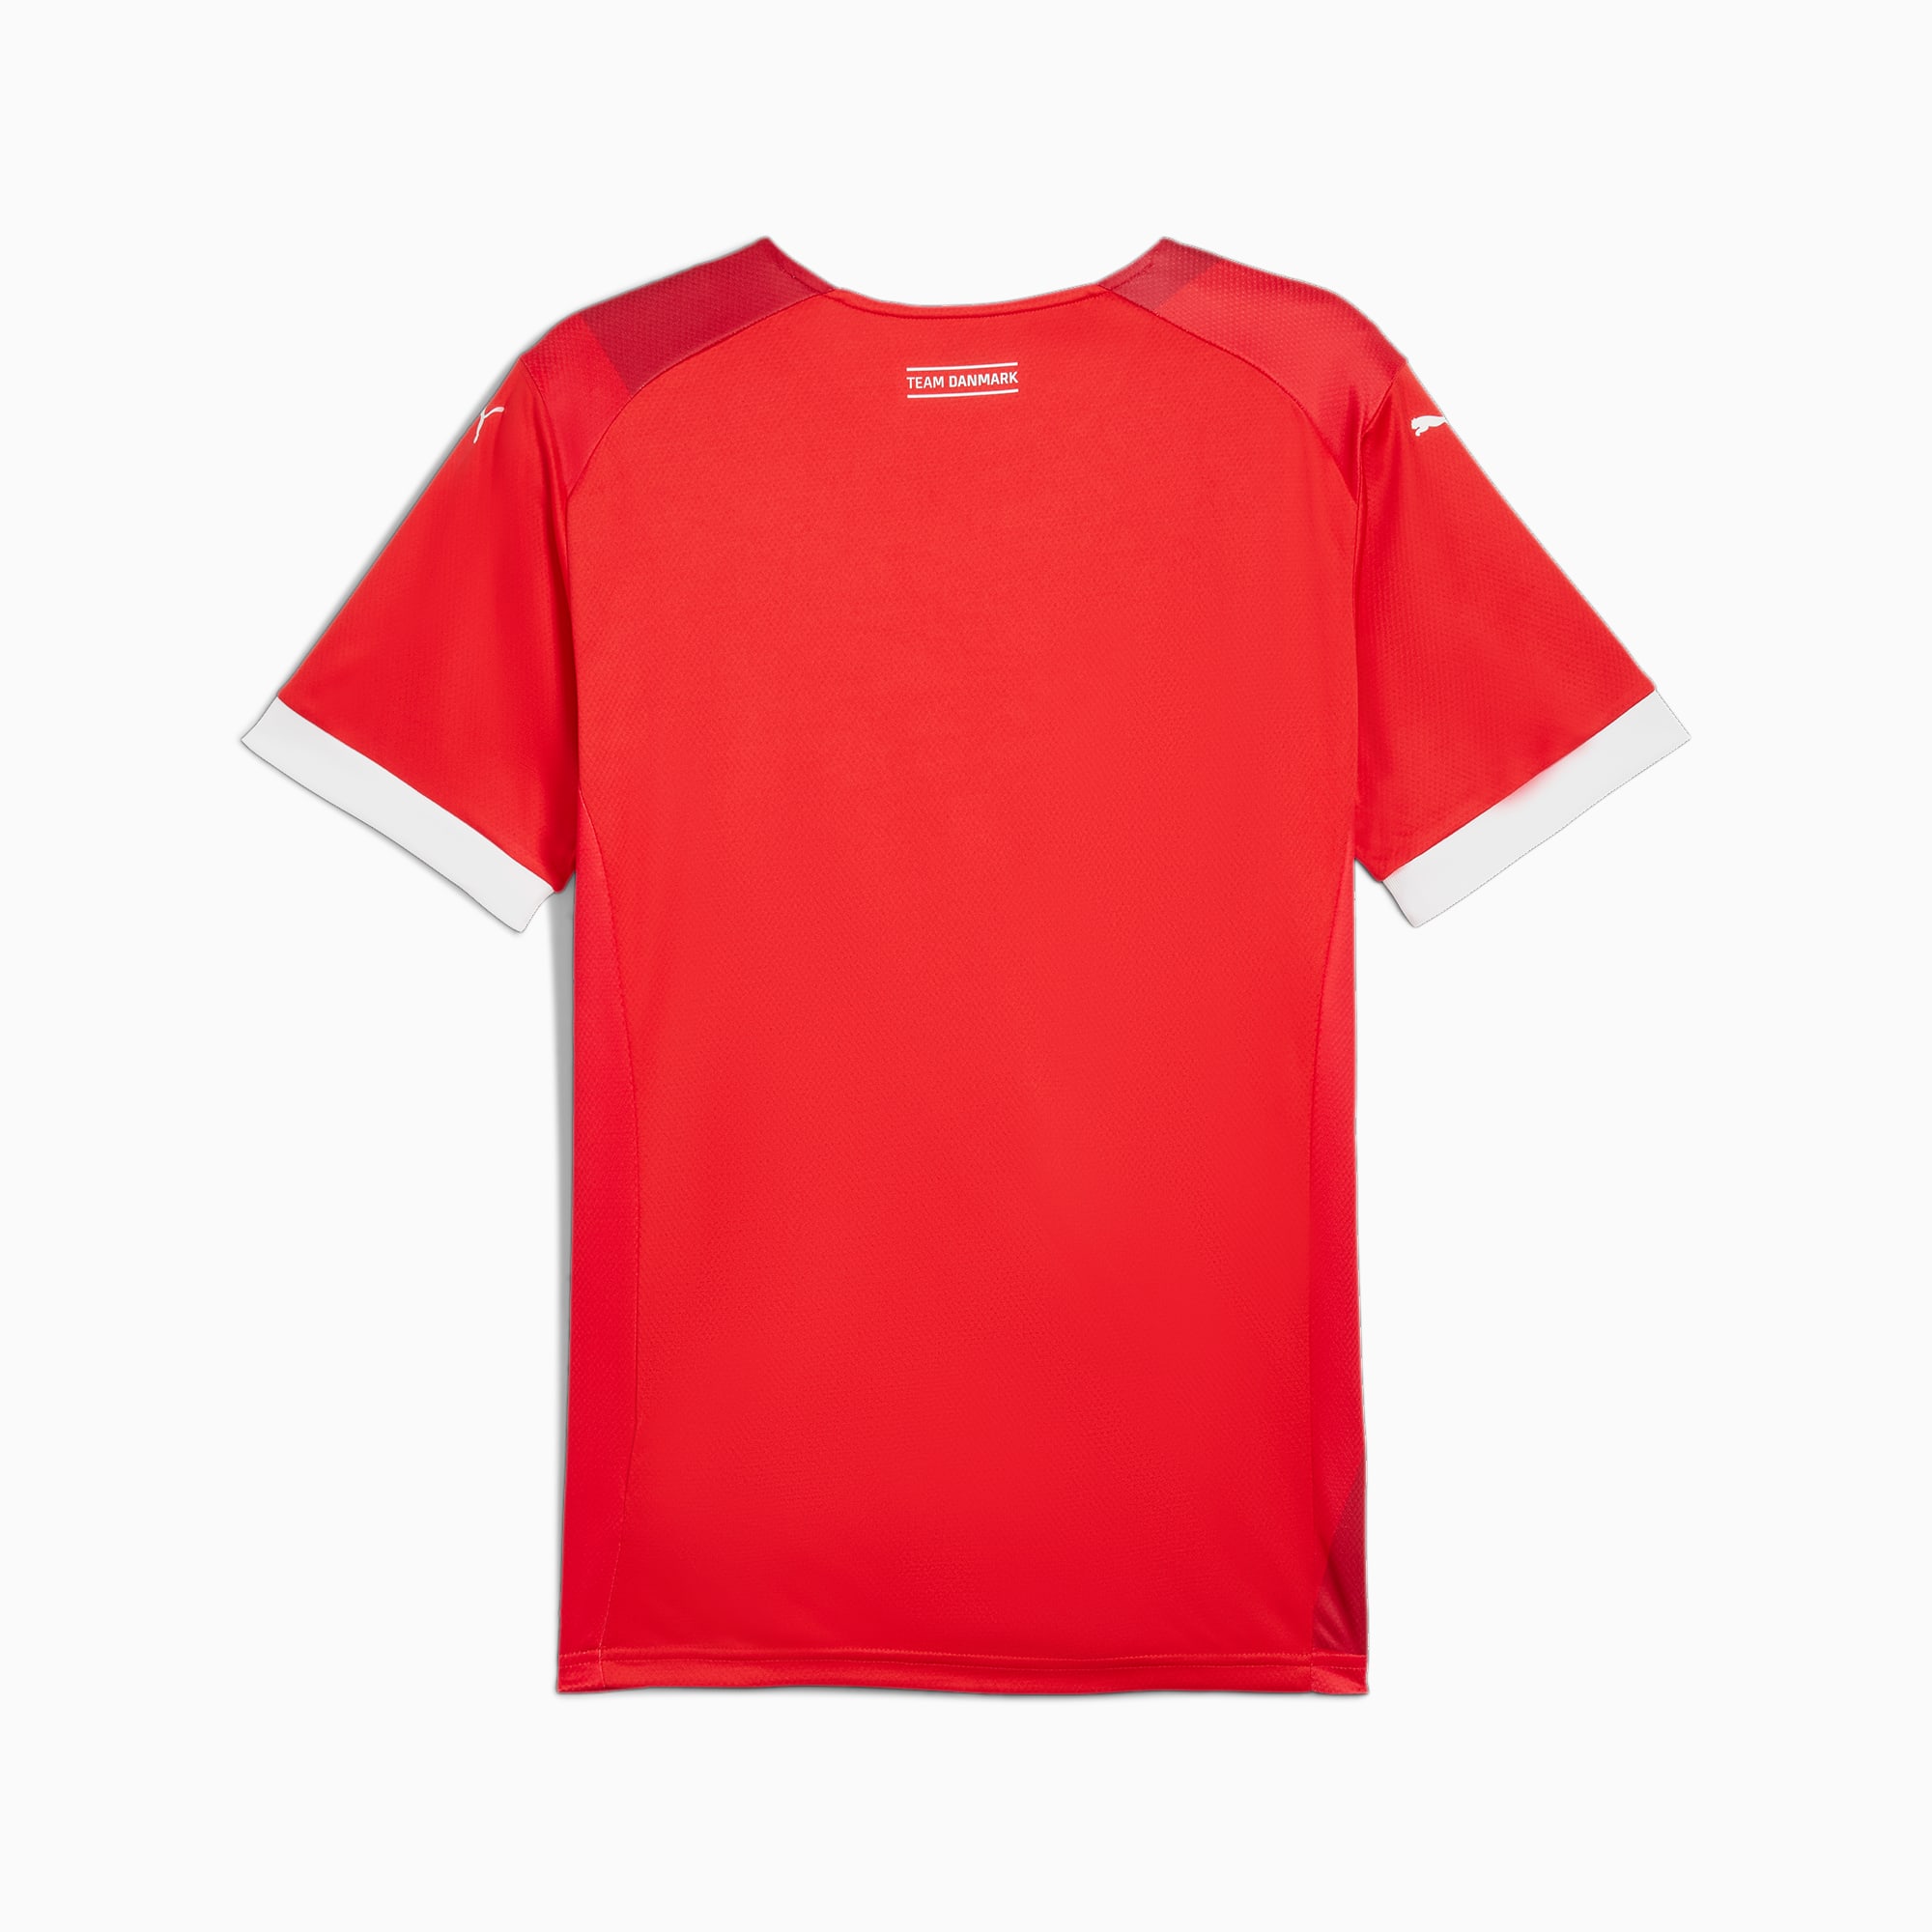 PUMA Denmark Handball Men's Home Jersey, Red/White, Size XS, Clothing